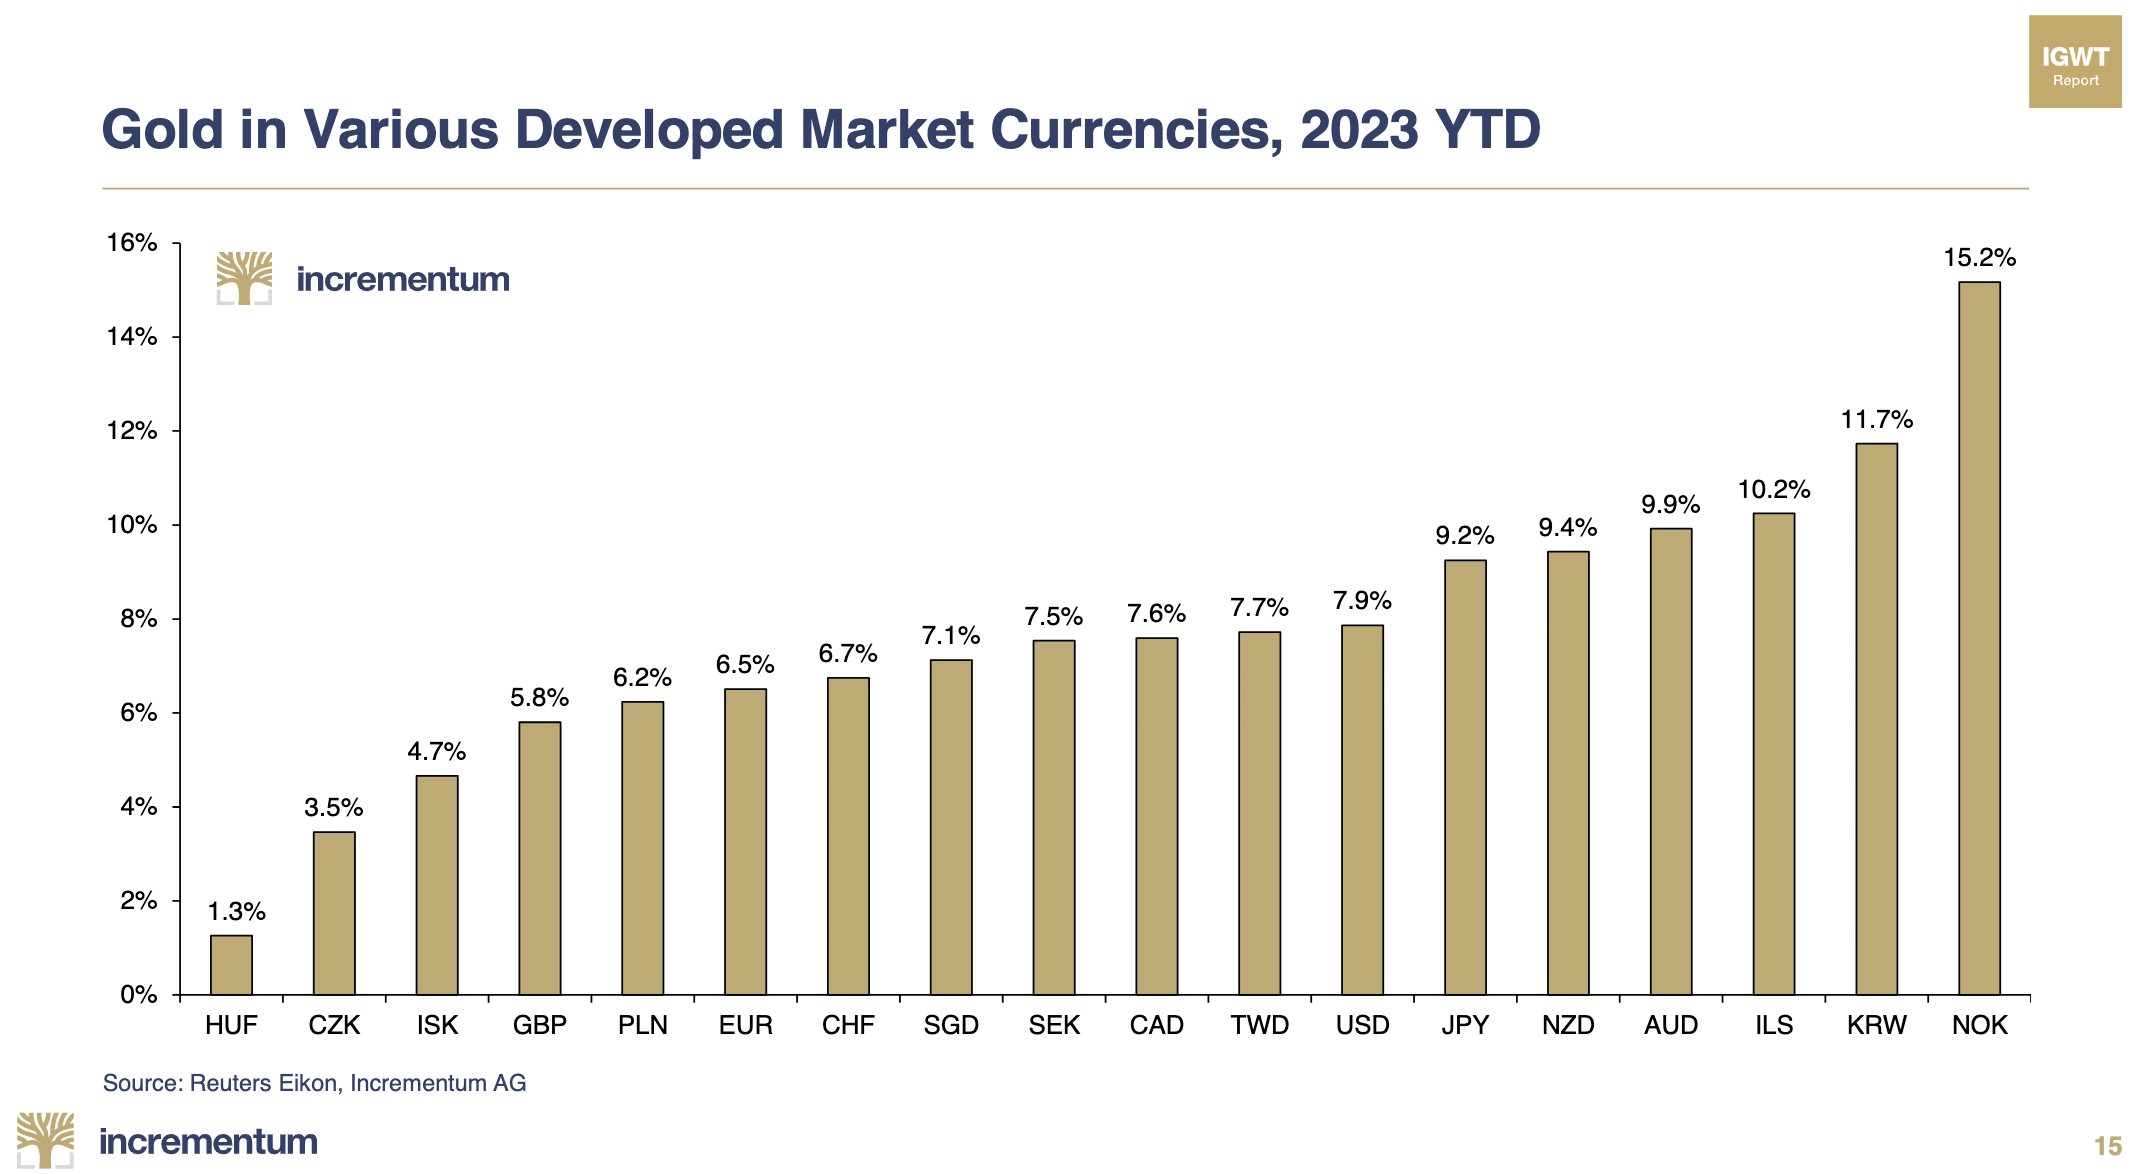 Gold in NZD YTD 2023 Versus Other Developed Market Currencies